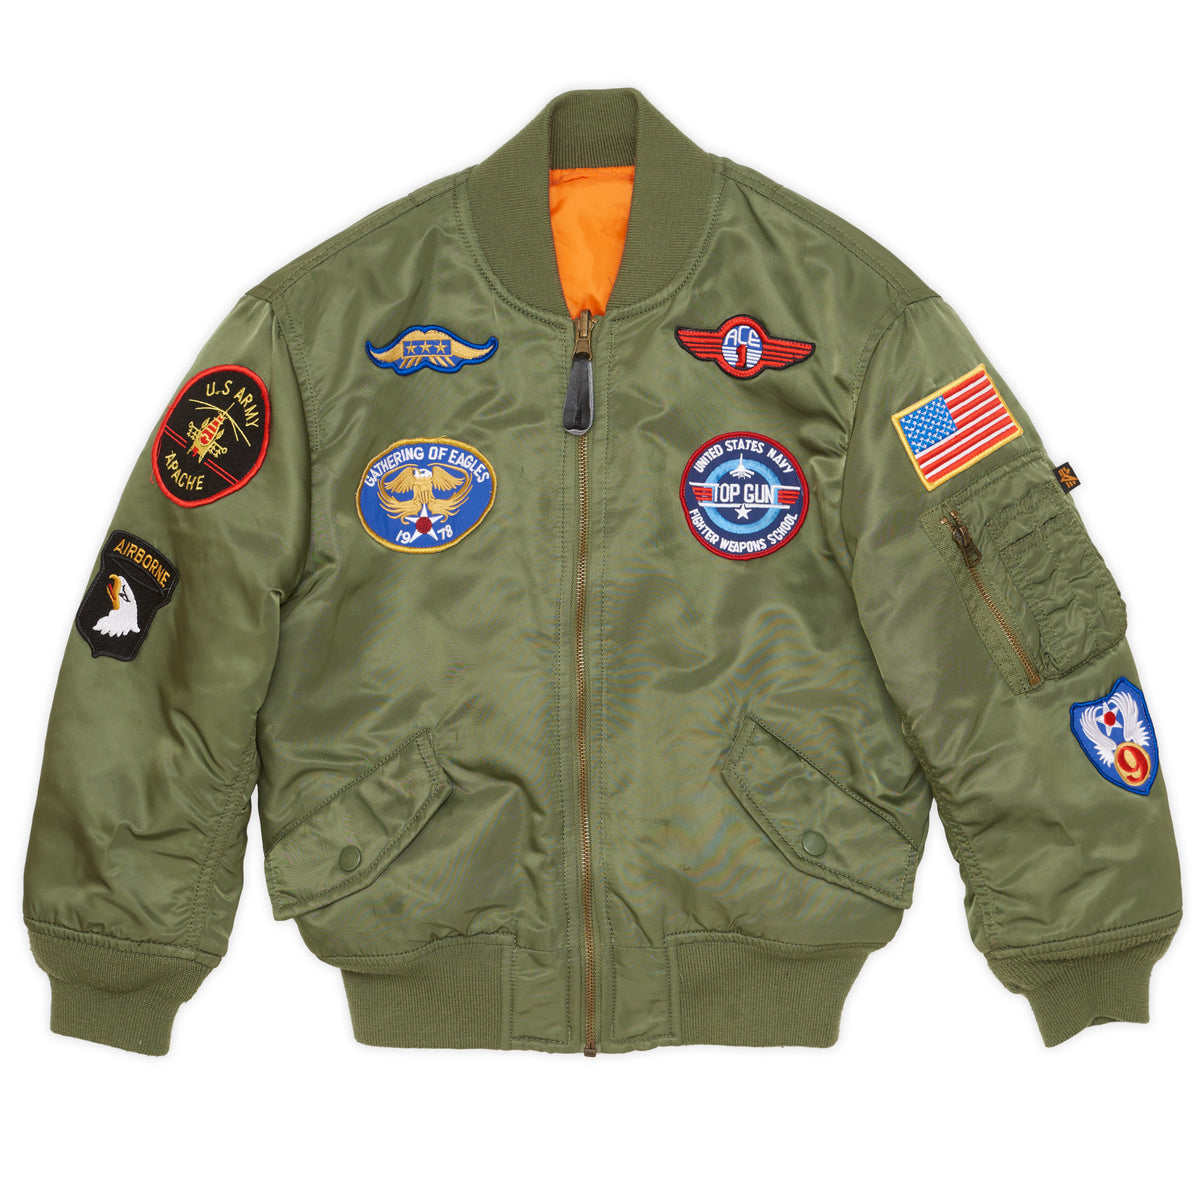 YL ~Men's ALPHA INDUSTRIES MA-1 Top Gun Flight Jacket Bomber RARE Army Fits  S-M